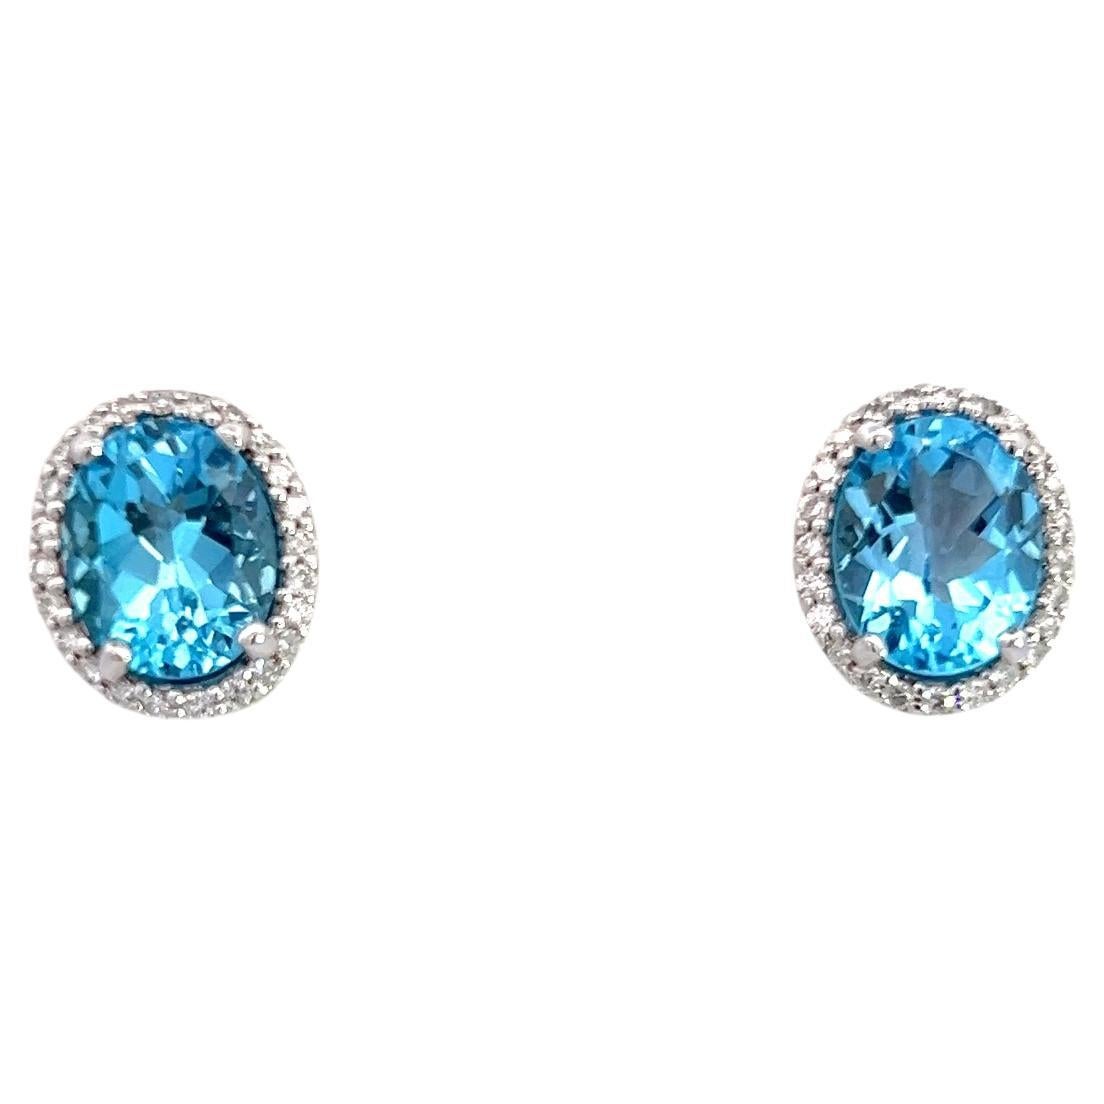 Natural Topaz Diamond Stud Earrings 14k W Gold 6.98 TCW Certified For Sale